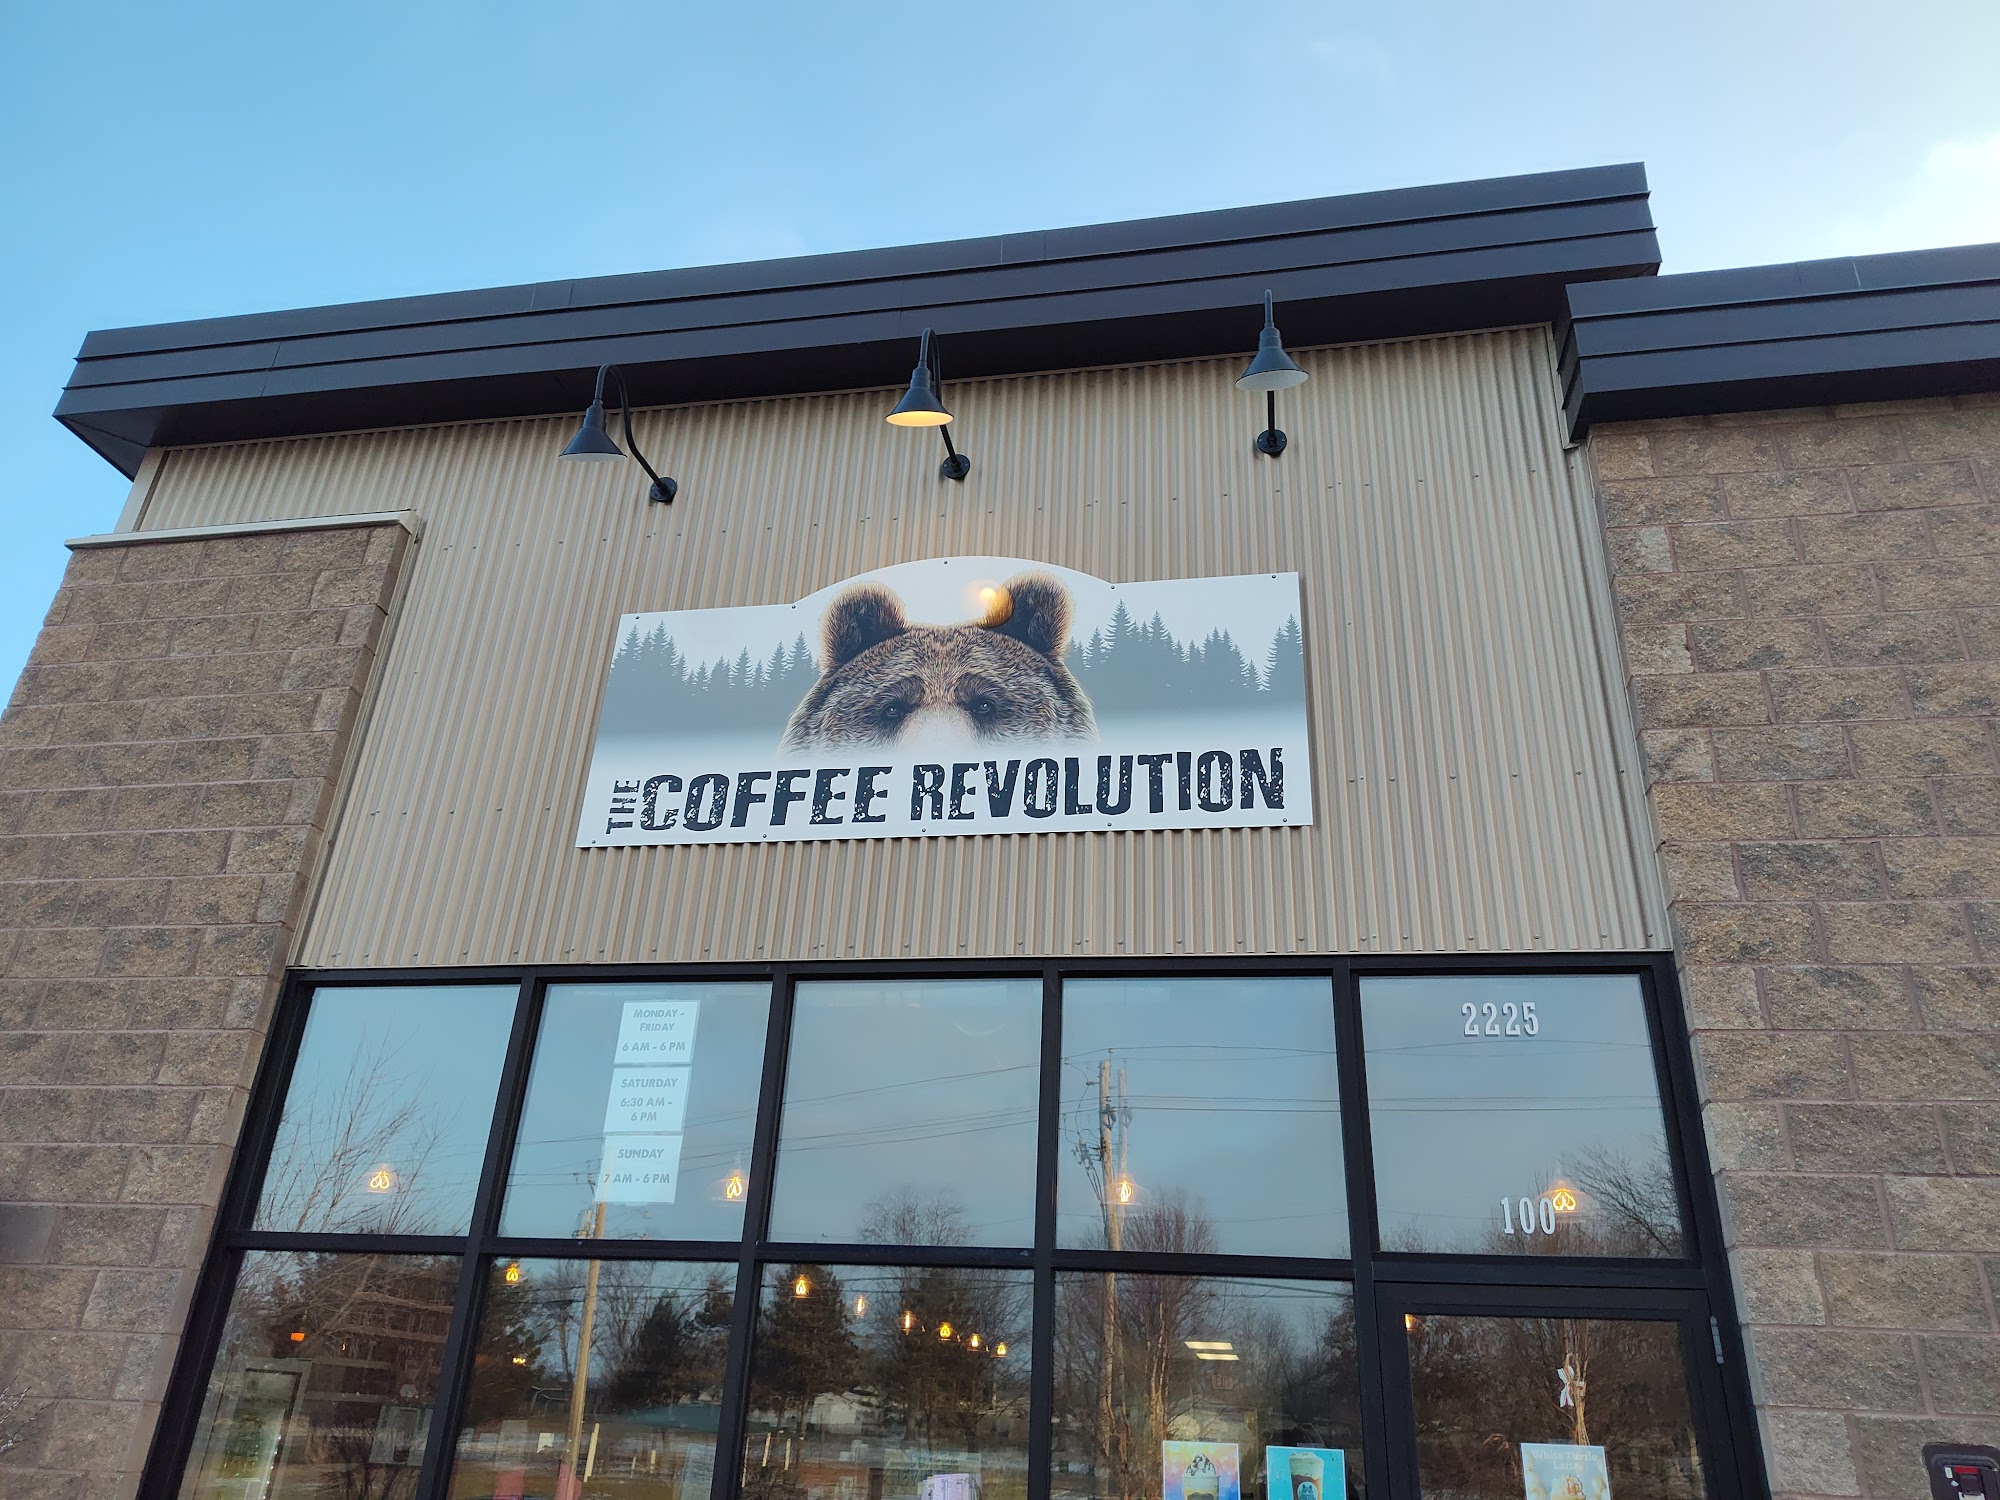 The Coffee Revolution